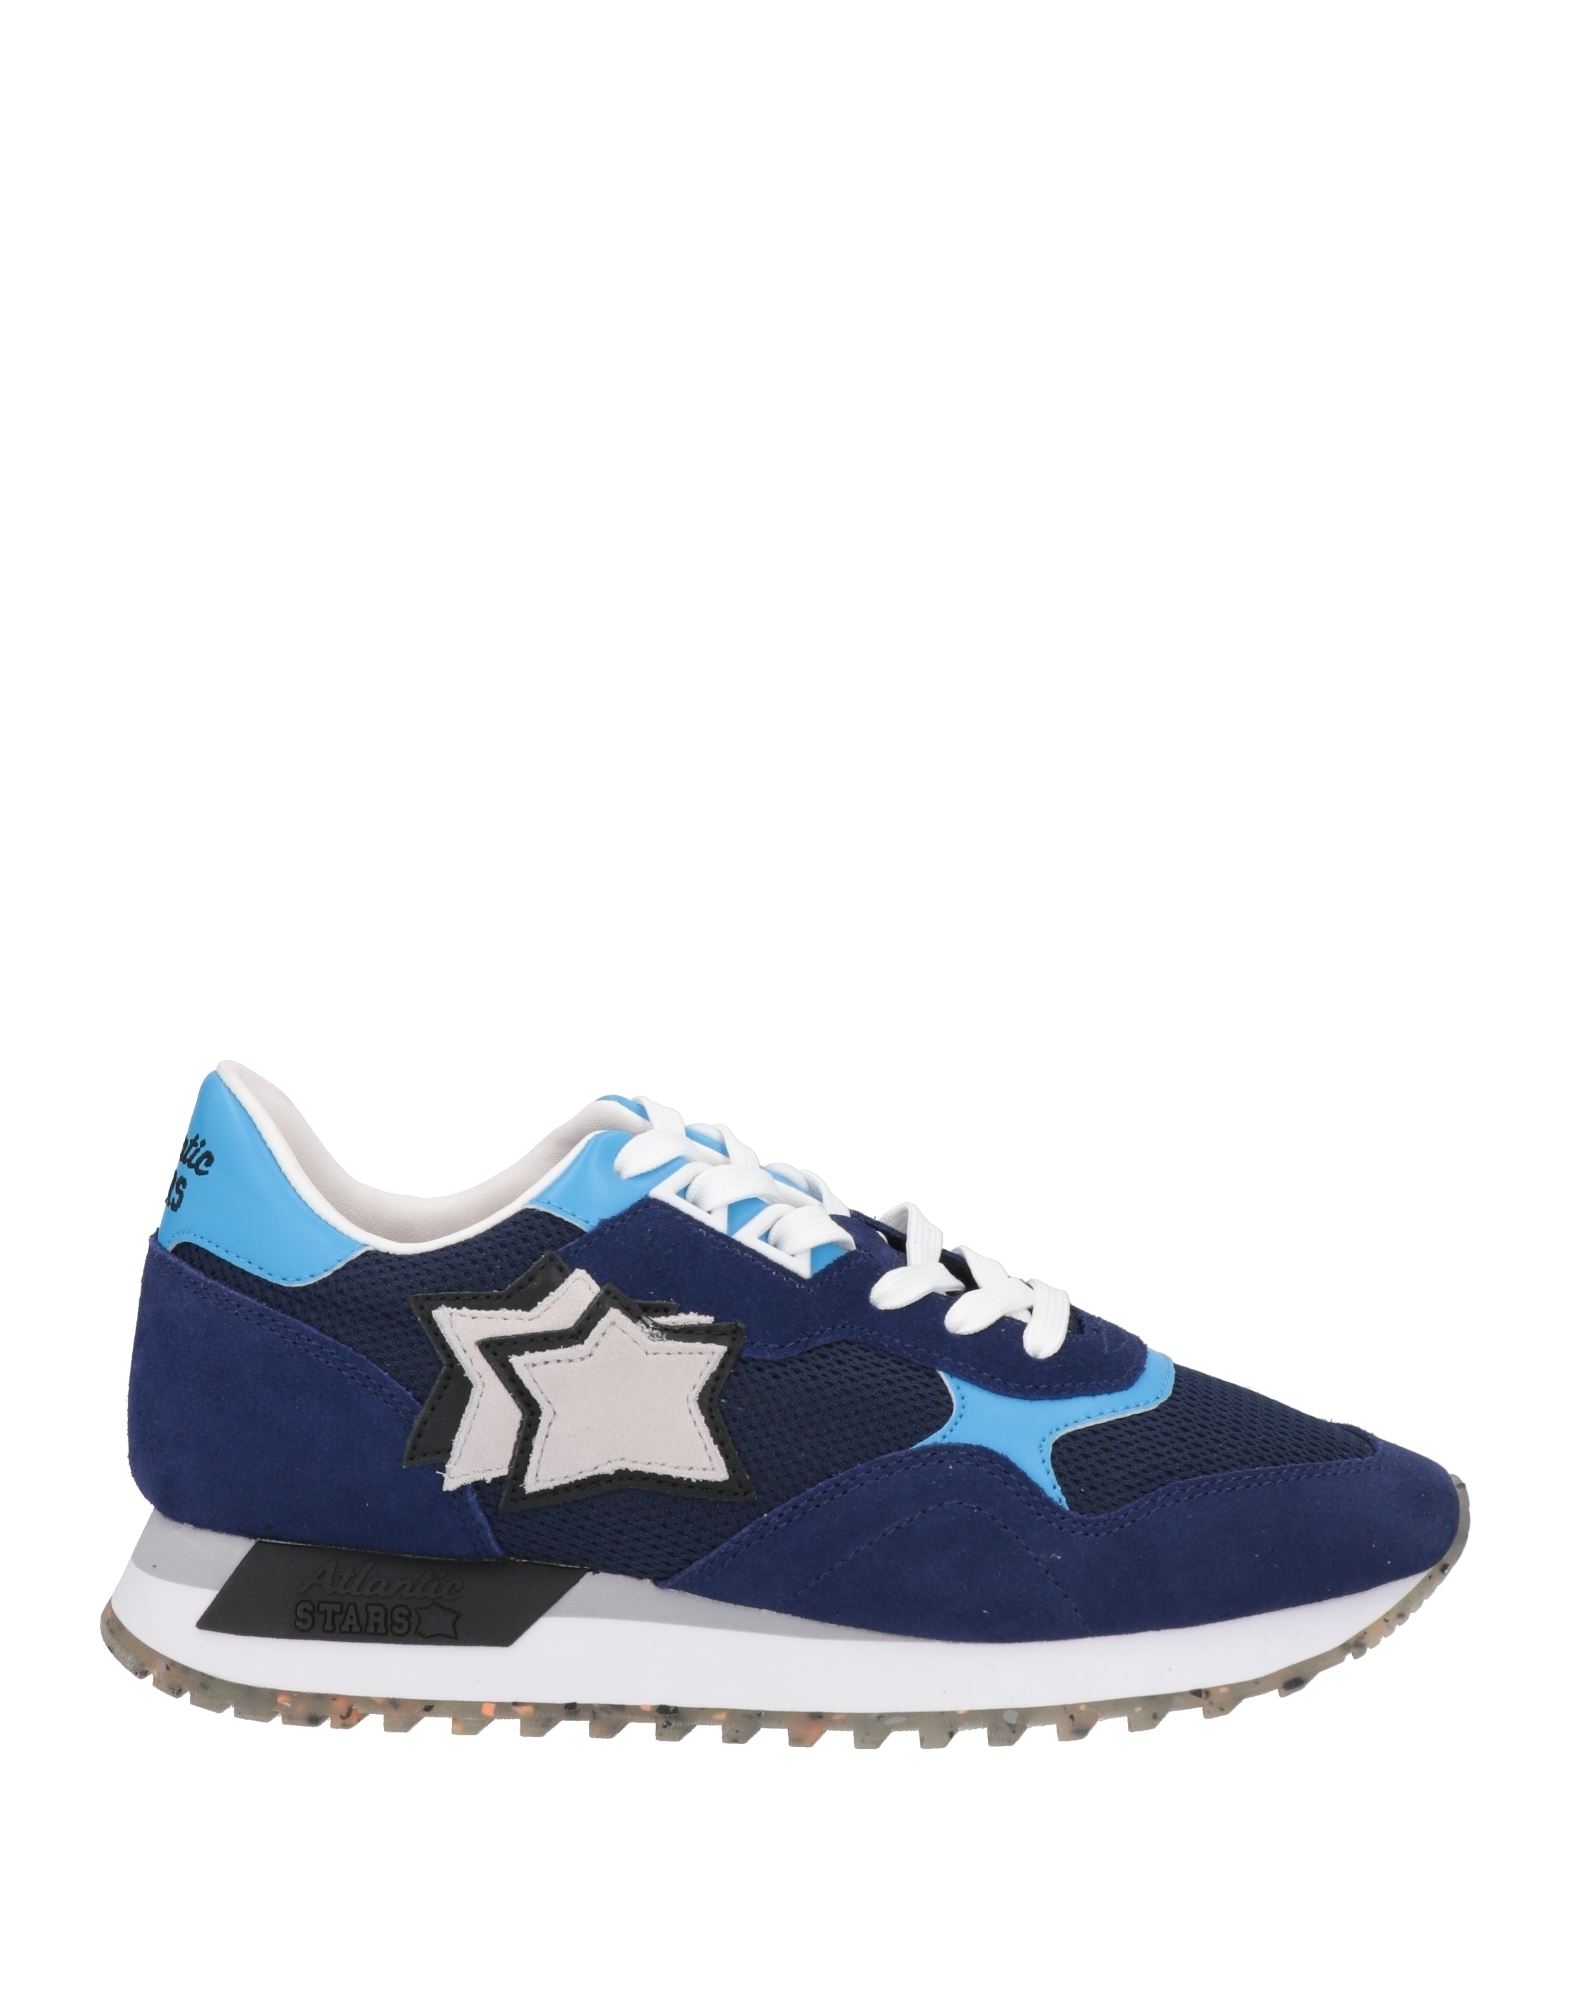 ATLANTIC STARS Sneakers Herren Nachtblau von ATLANTIC STARS